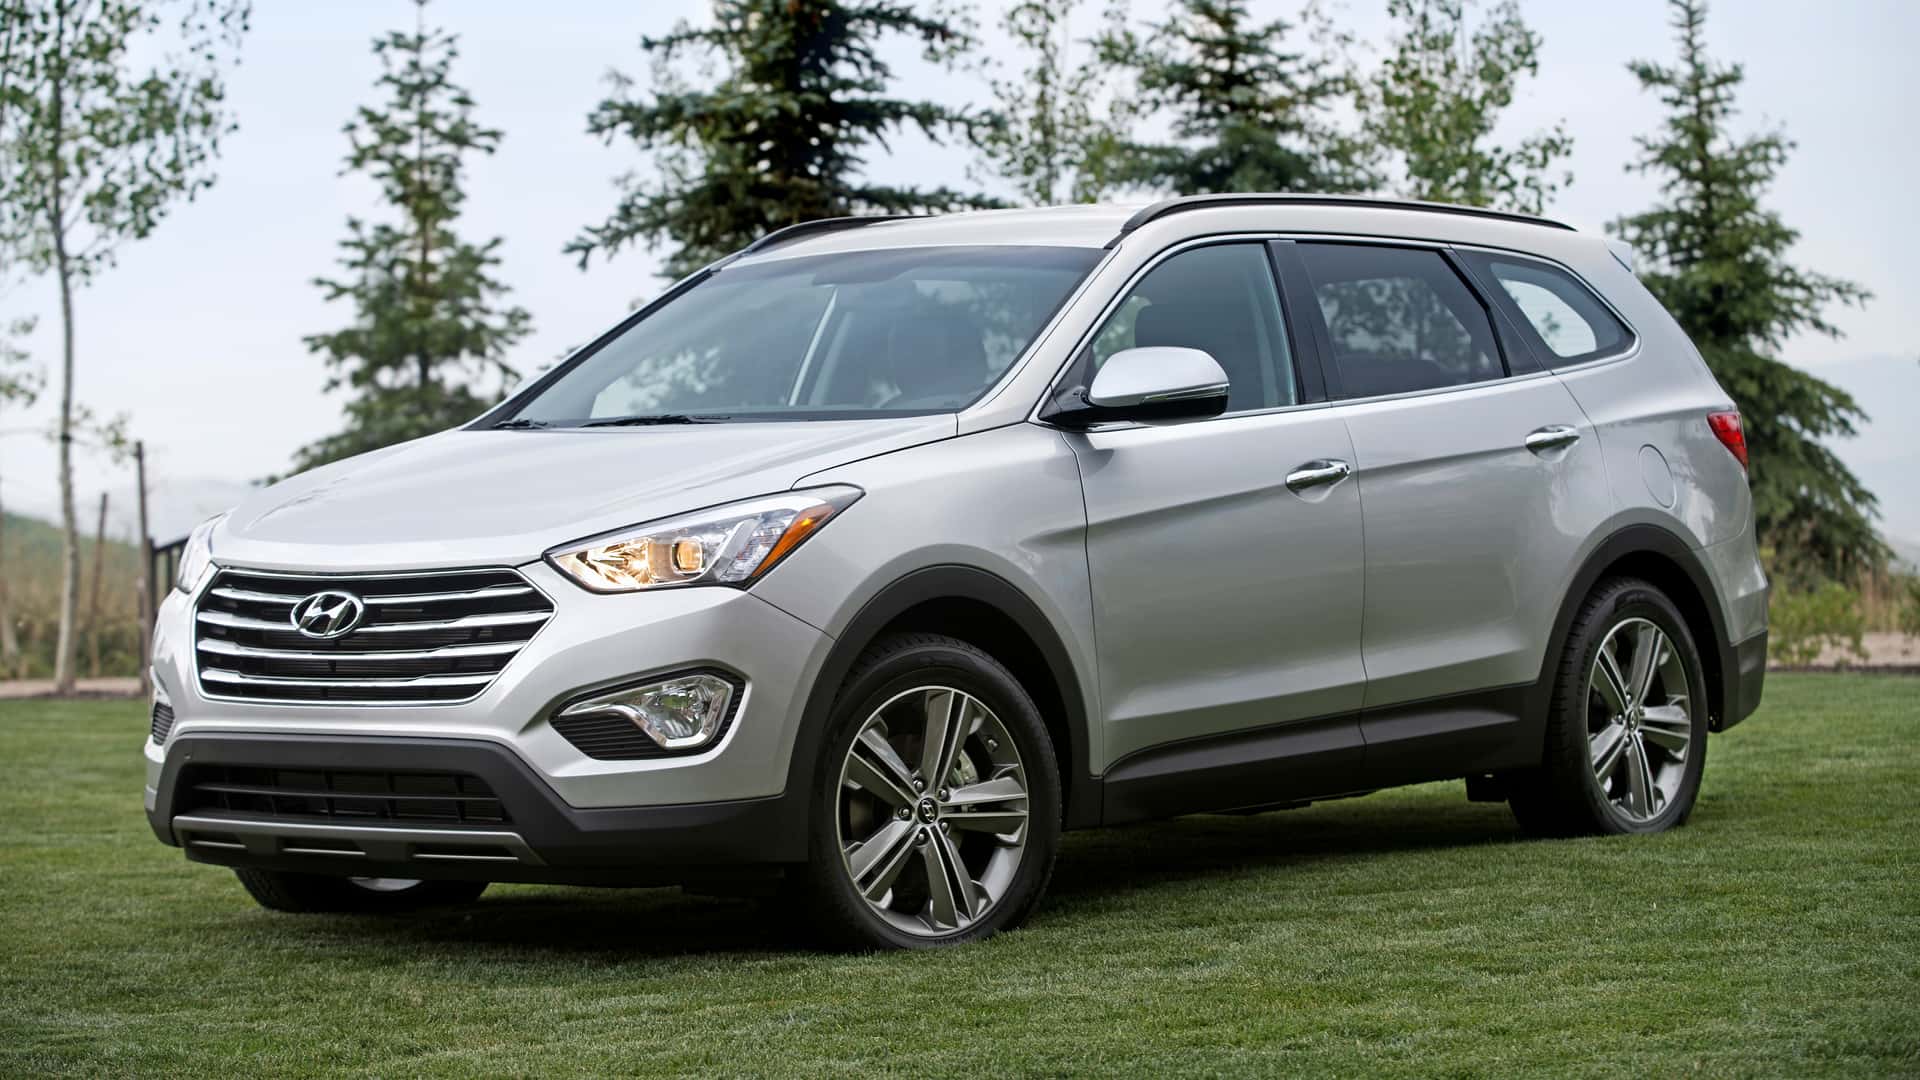 Hyundai Santa Fe thay đổi thiết kế như thế nào qua 5 thế hệ? third-gen-hyundai-santa-fe.jpg